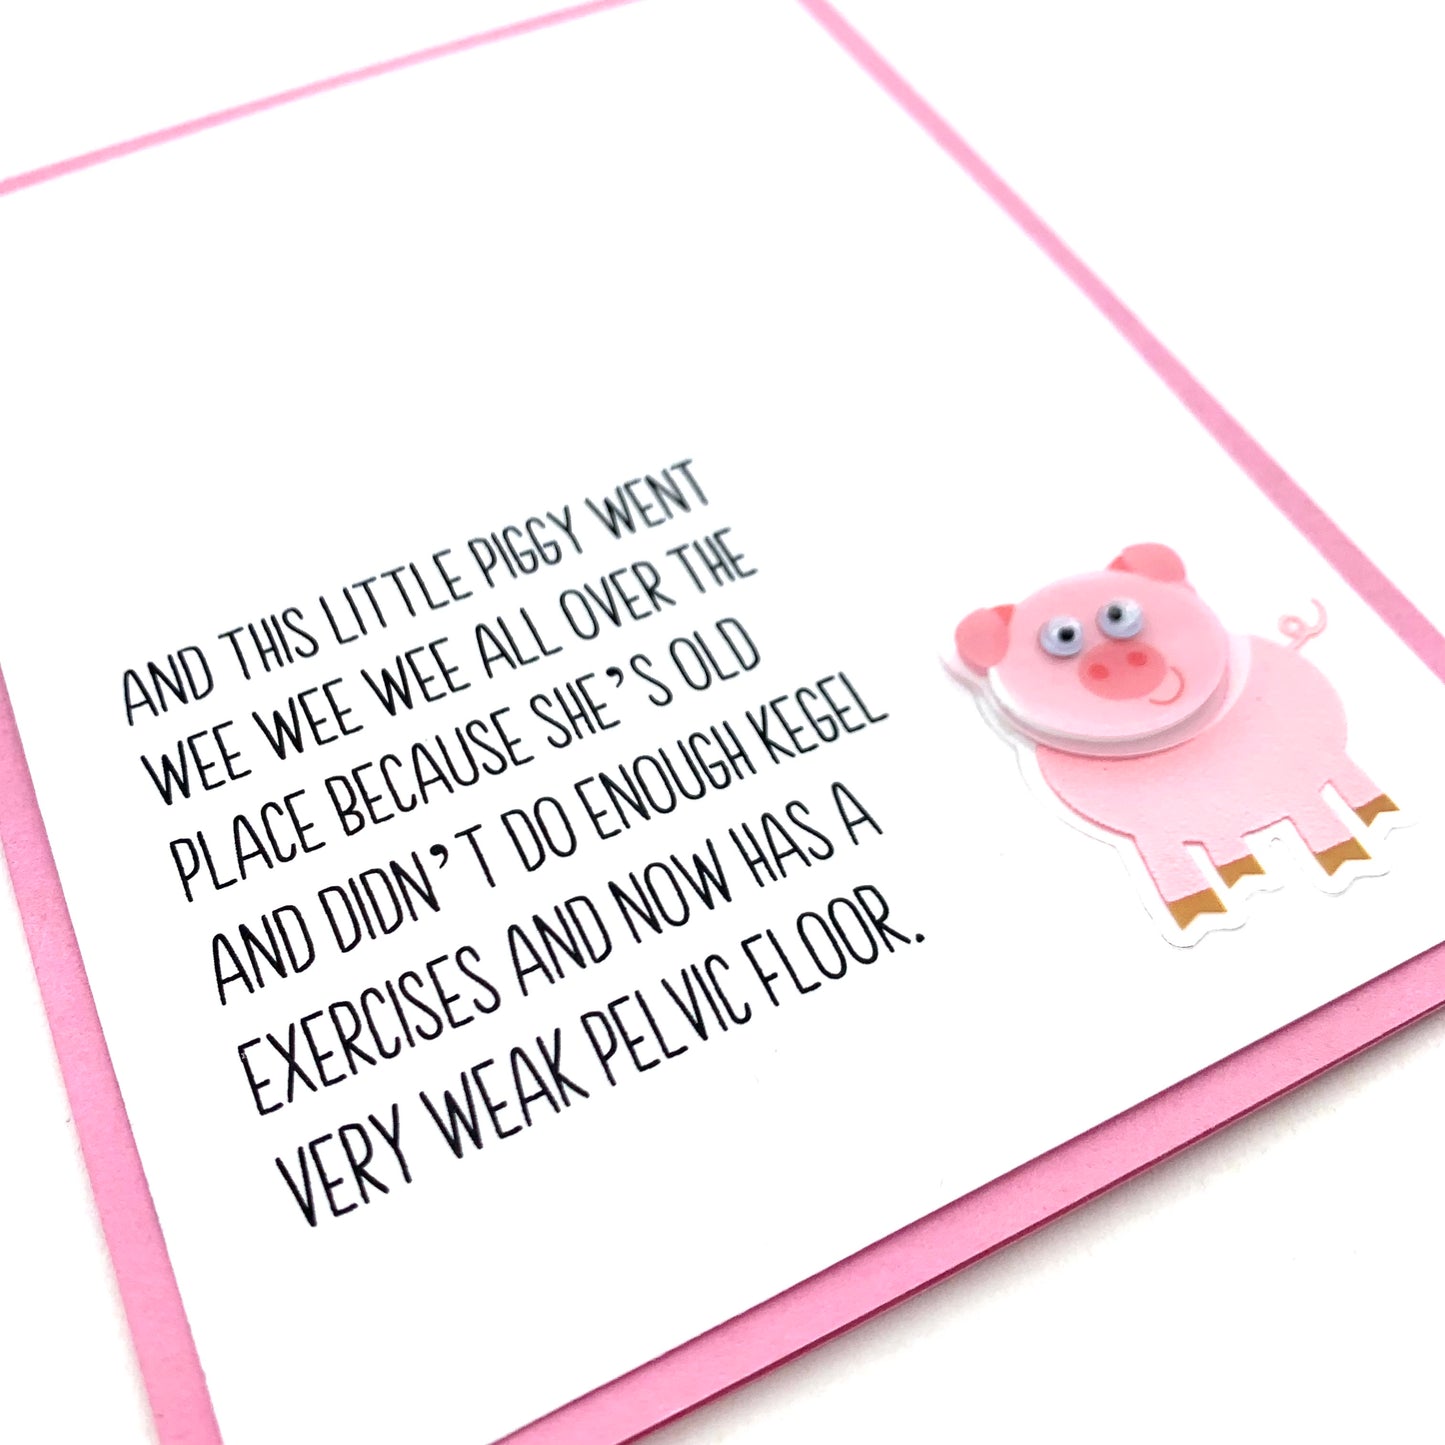 Piggy Went Wee Wee Kegel card